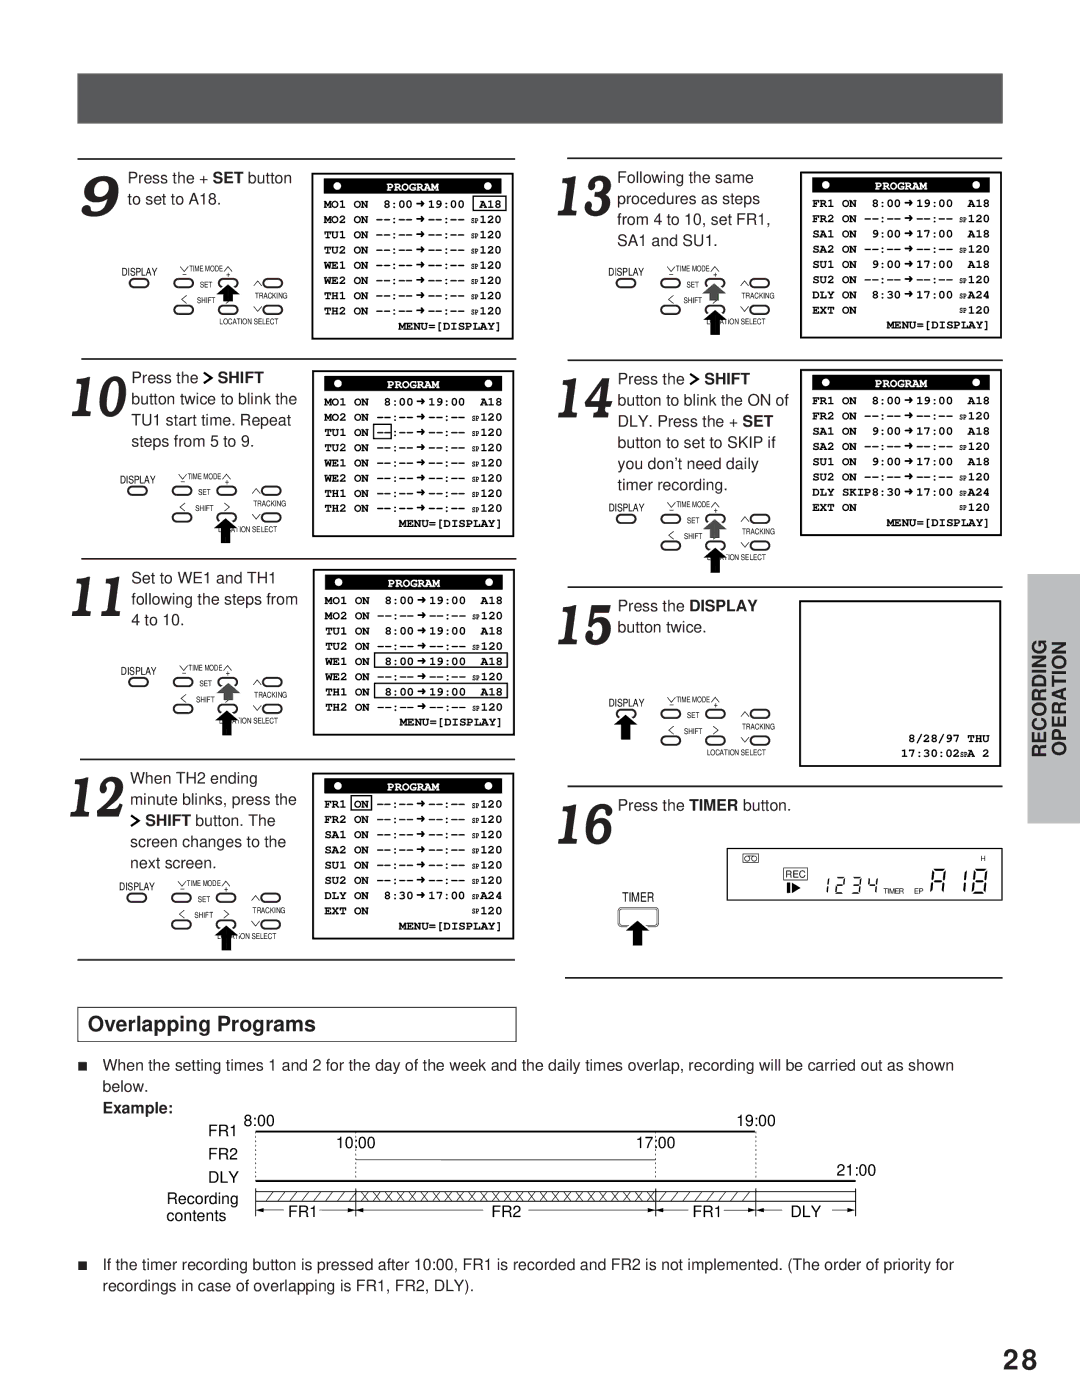 Toshiba kV-9168A instruction manual Overlapping Programs, Example, Dly, FR1 FR2 DLY 